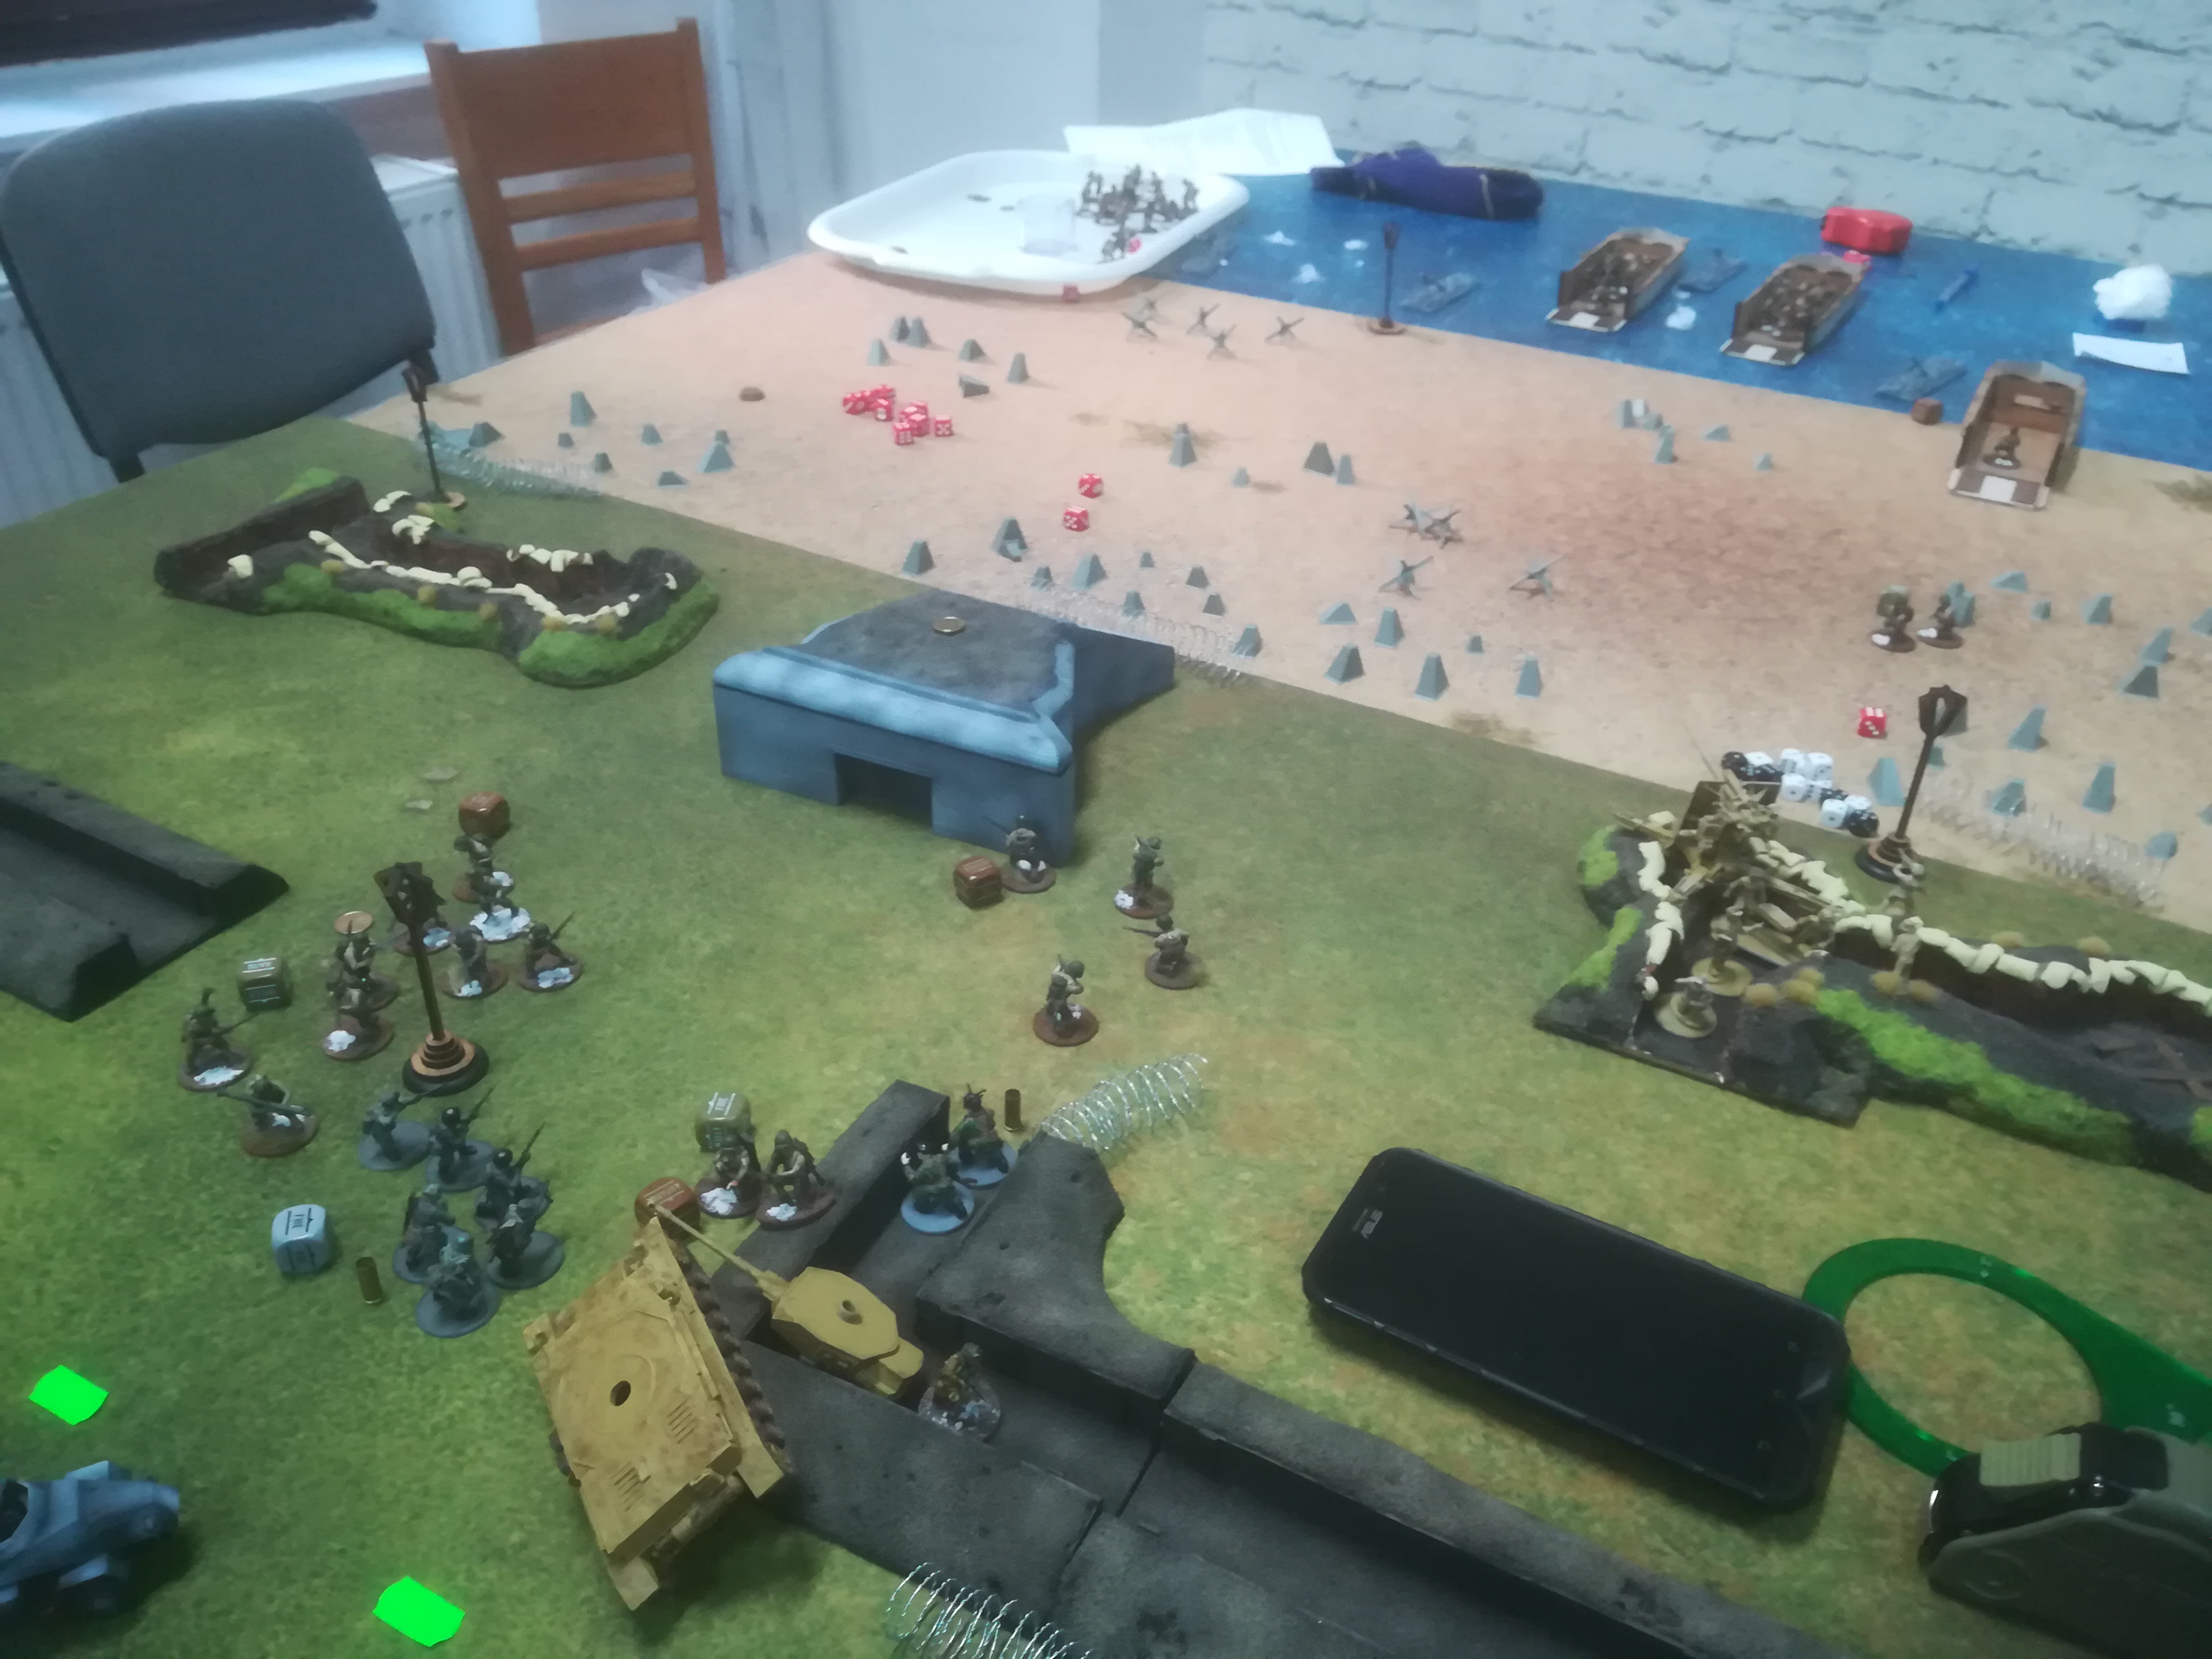 White Fire Batalion versus German engineer in a fierce infantry engagement